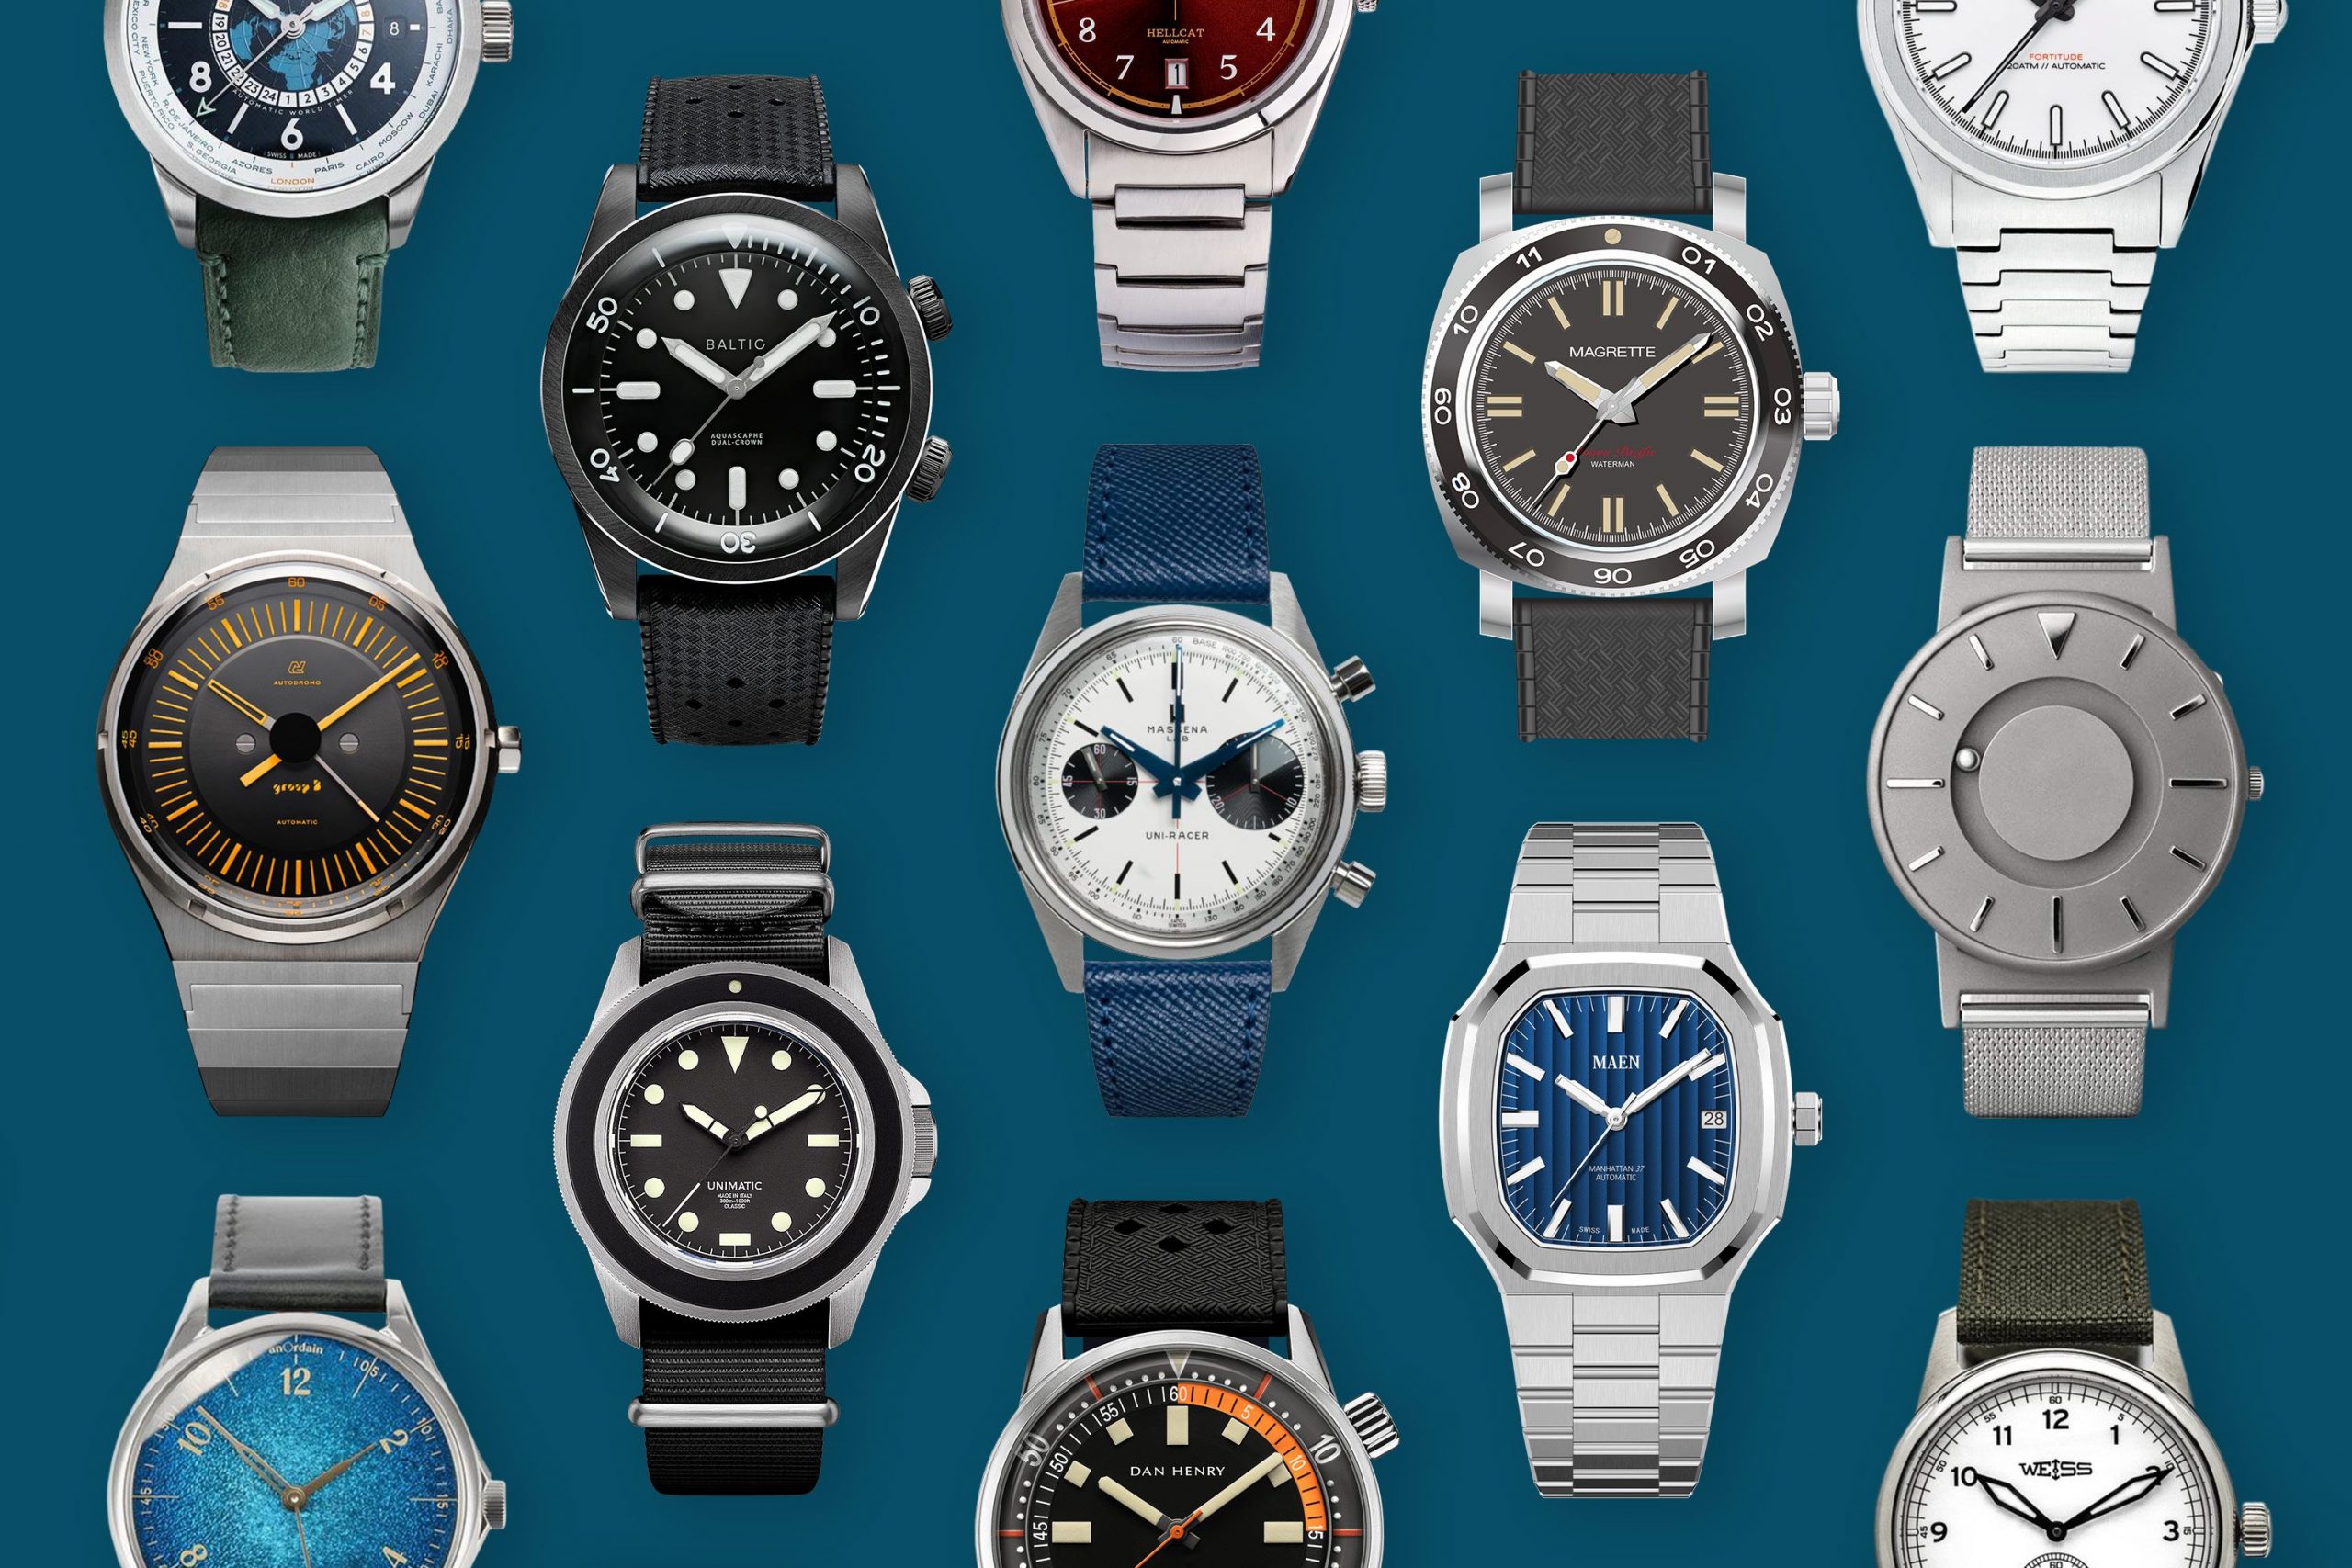 Serket microbrand watches